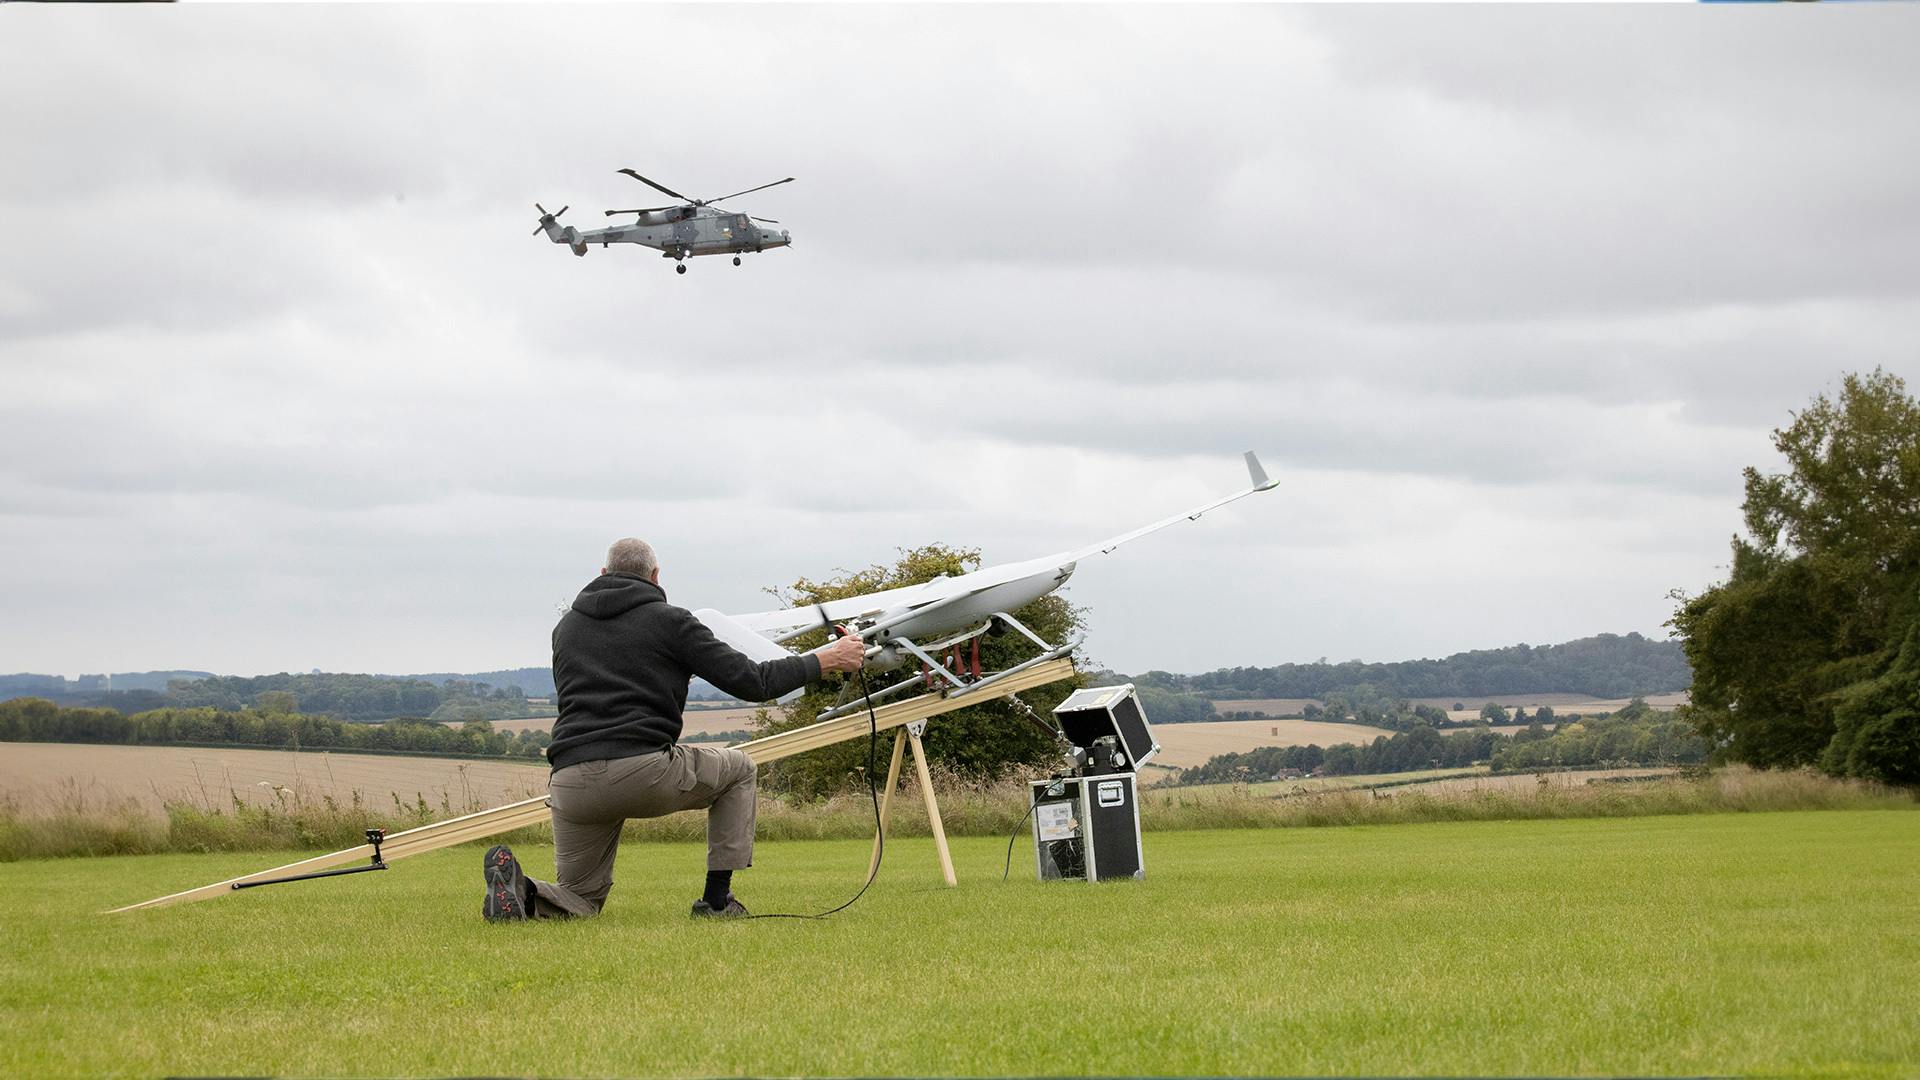 Preparing a drone for take-off